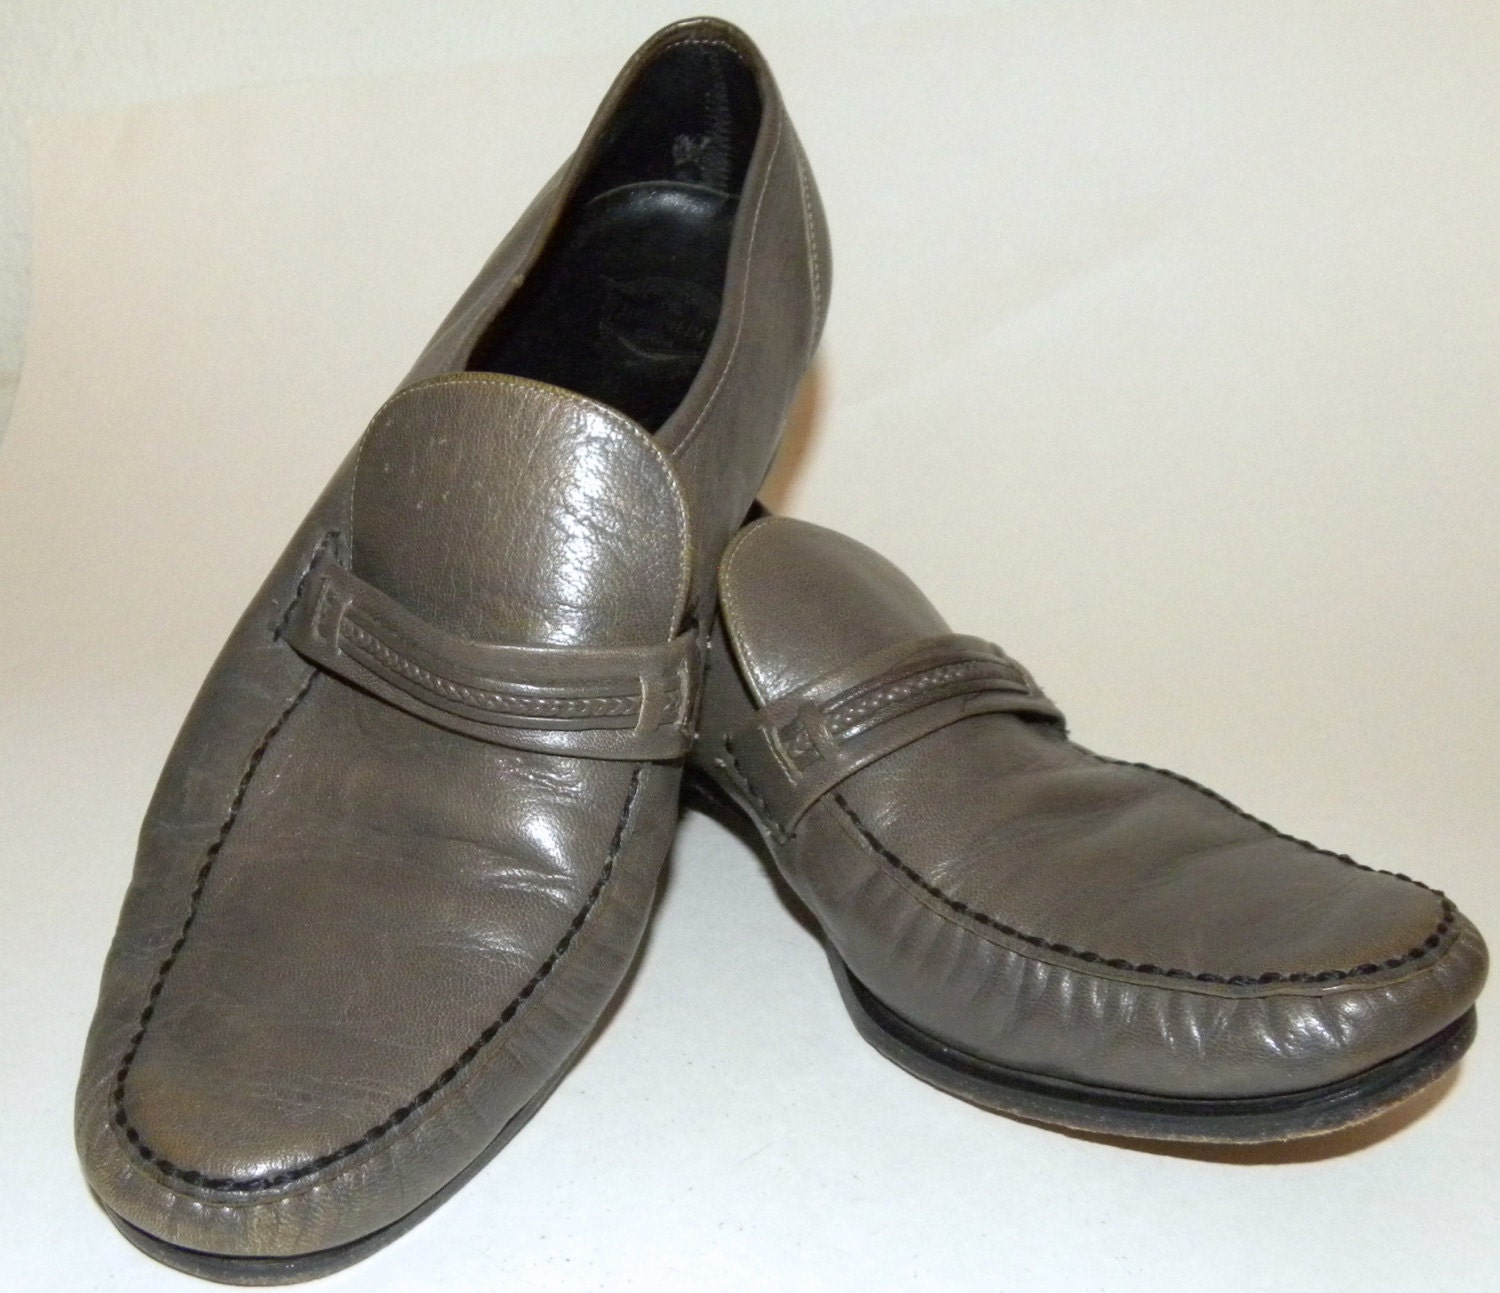 1970s 70s shoes / Men's Vintage shoes / Loafers